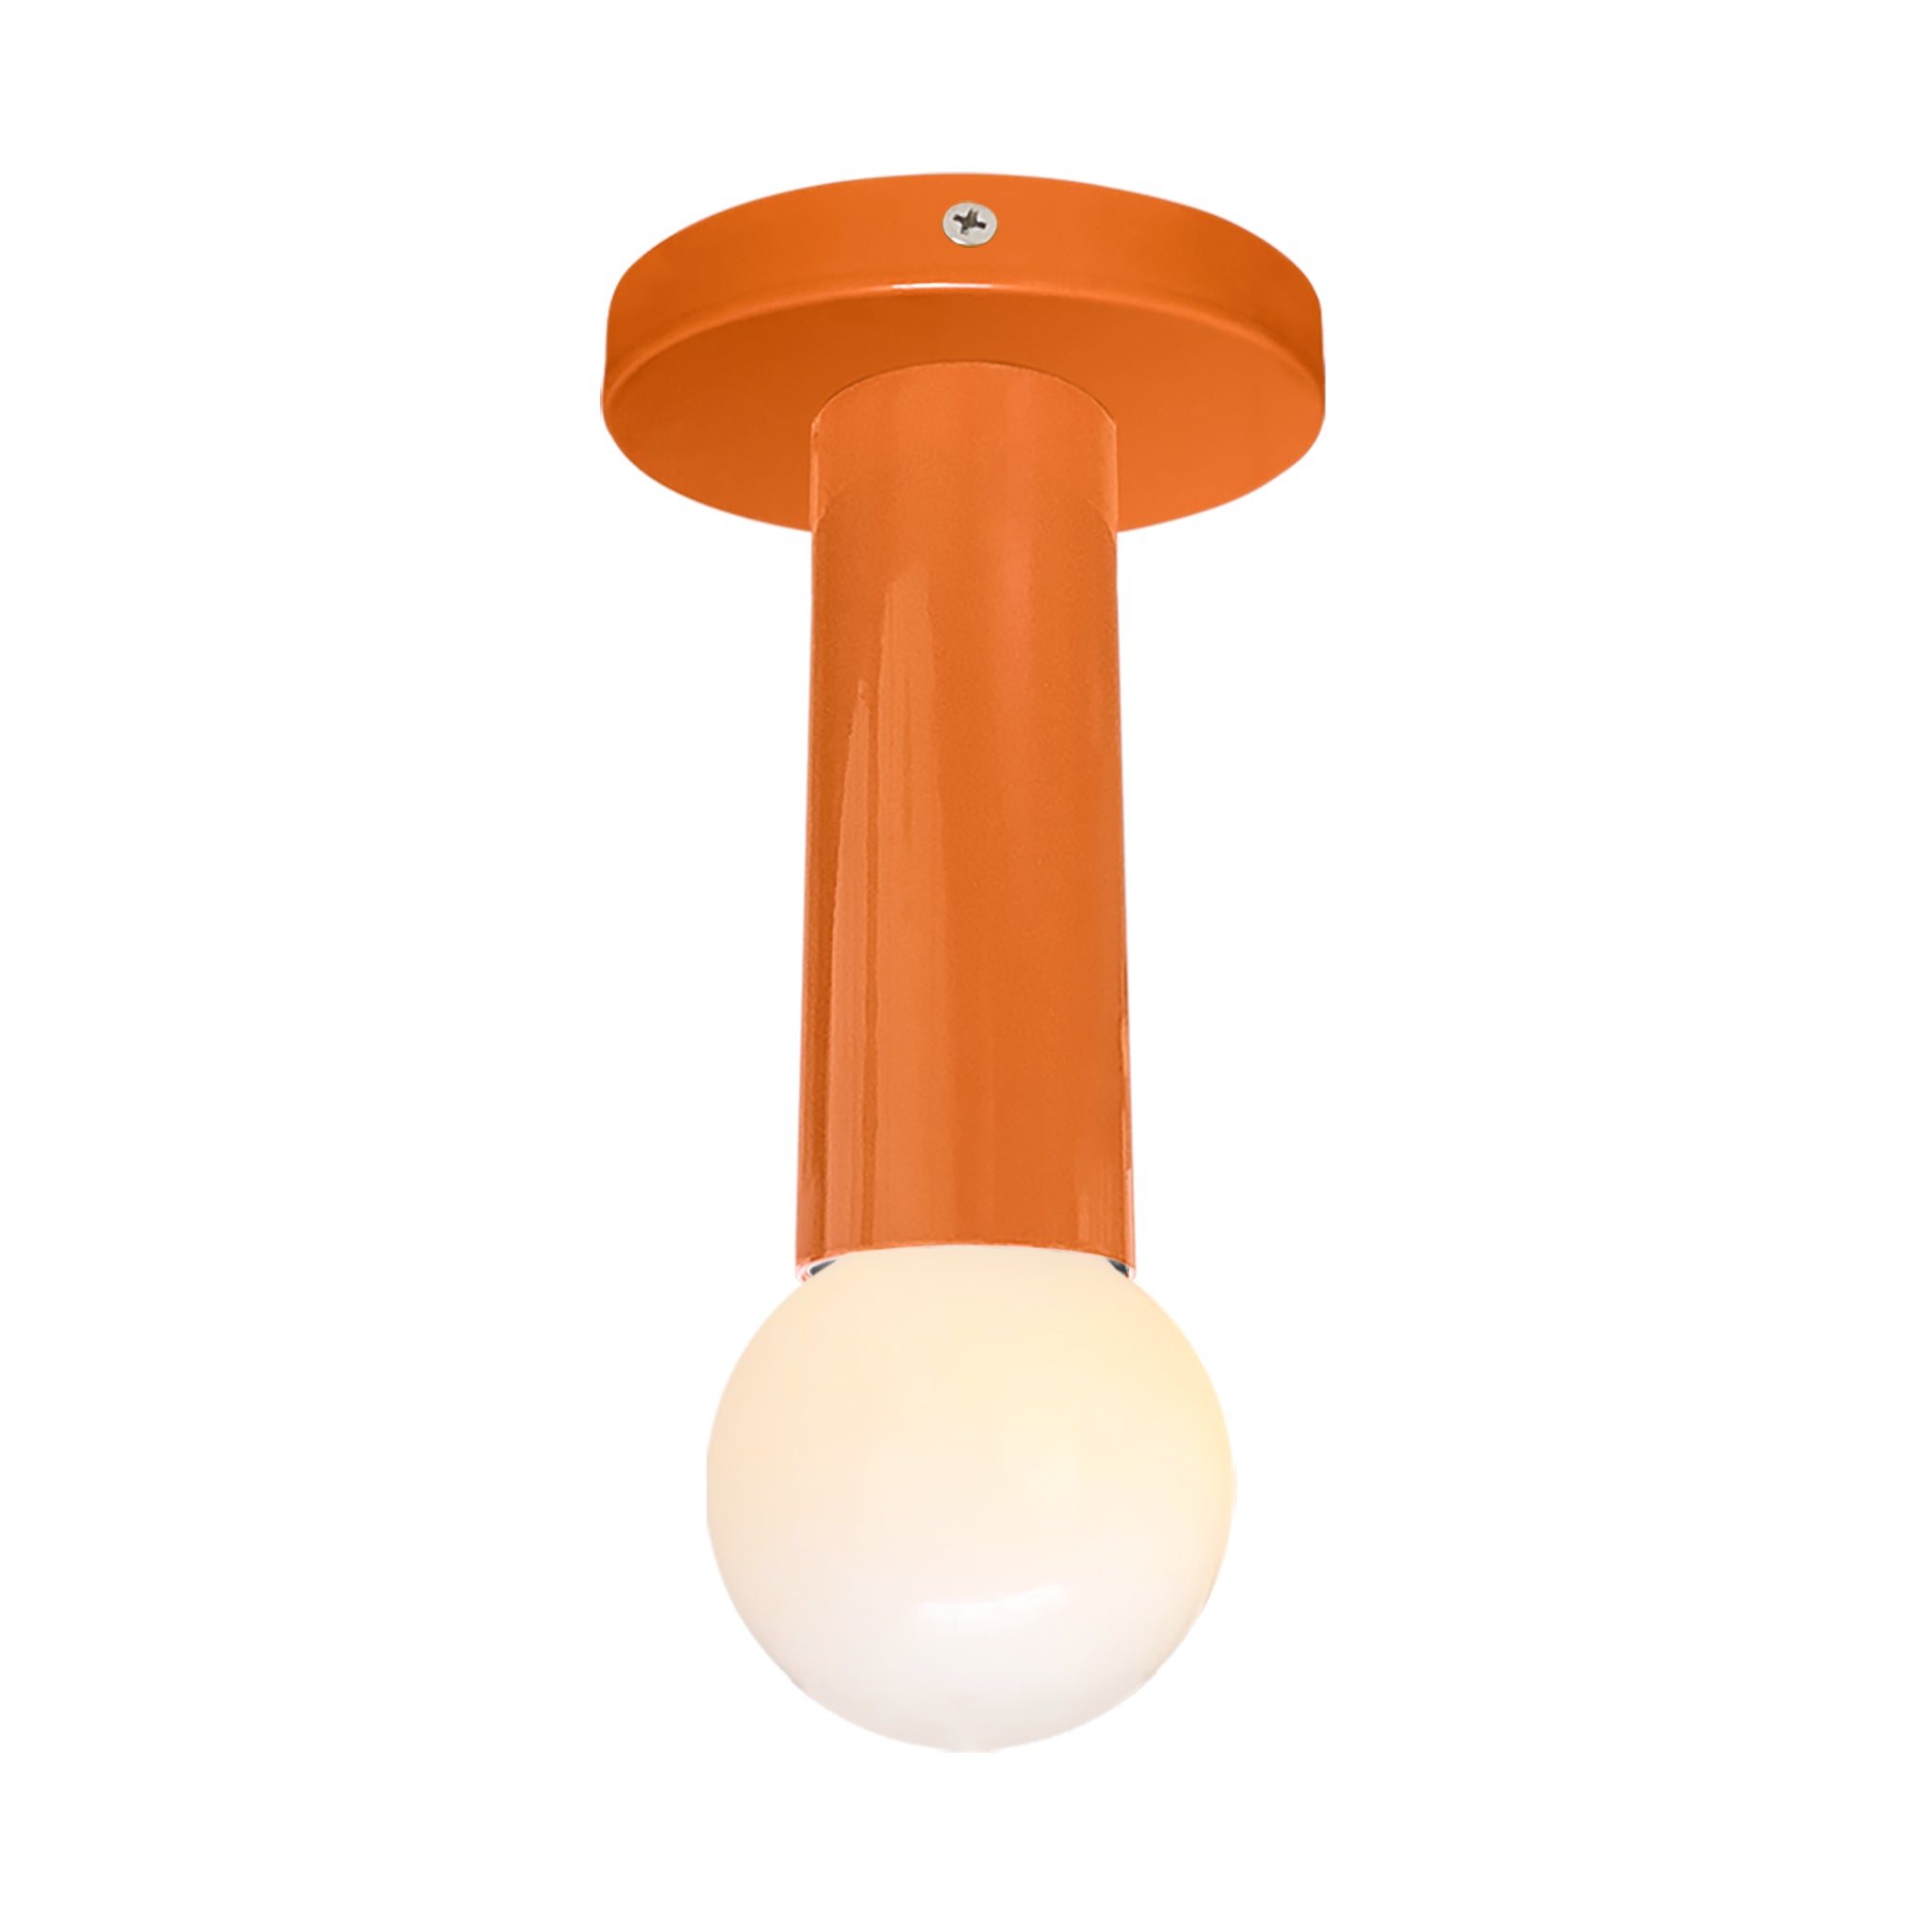 Nickel and orange color Eureka flush mount Dutton Brown lighting